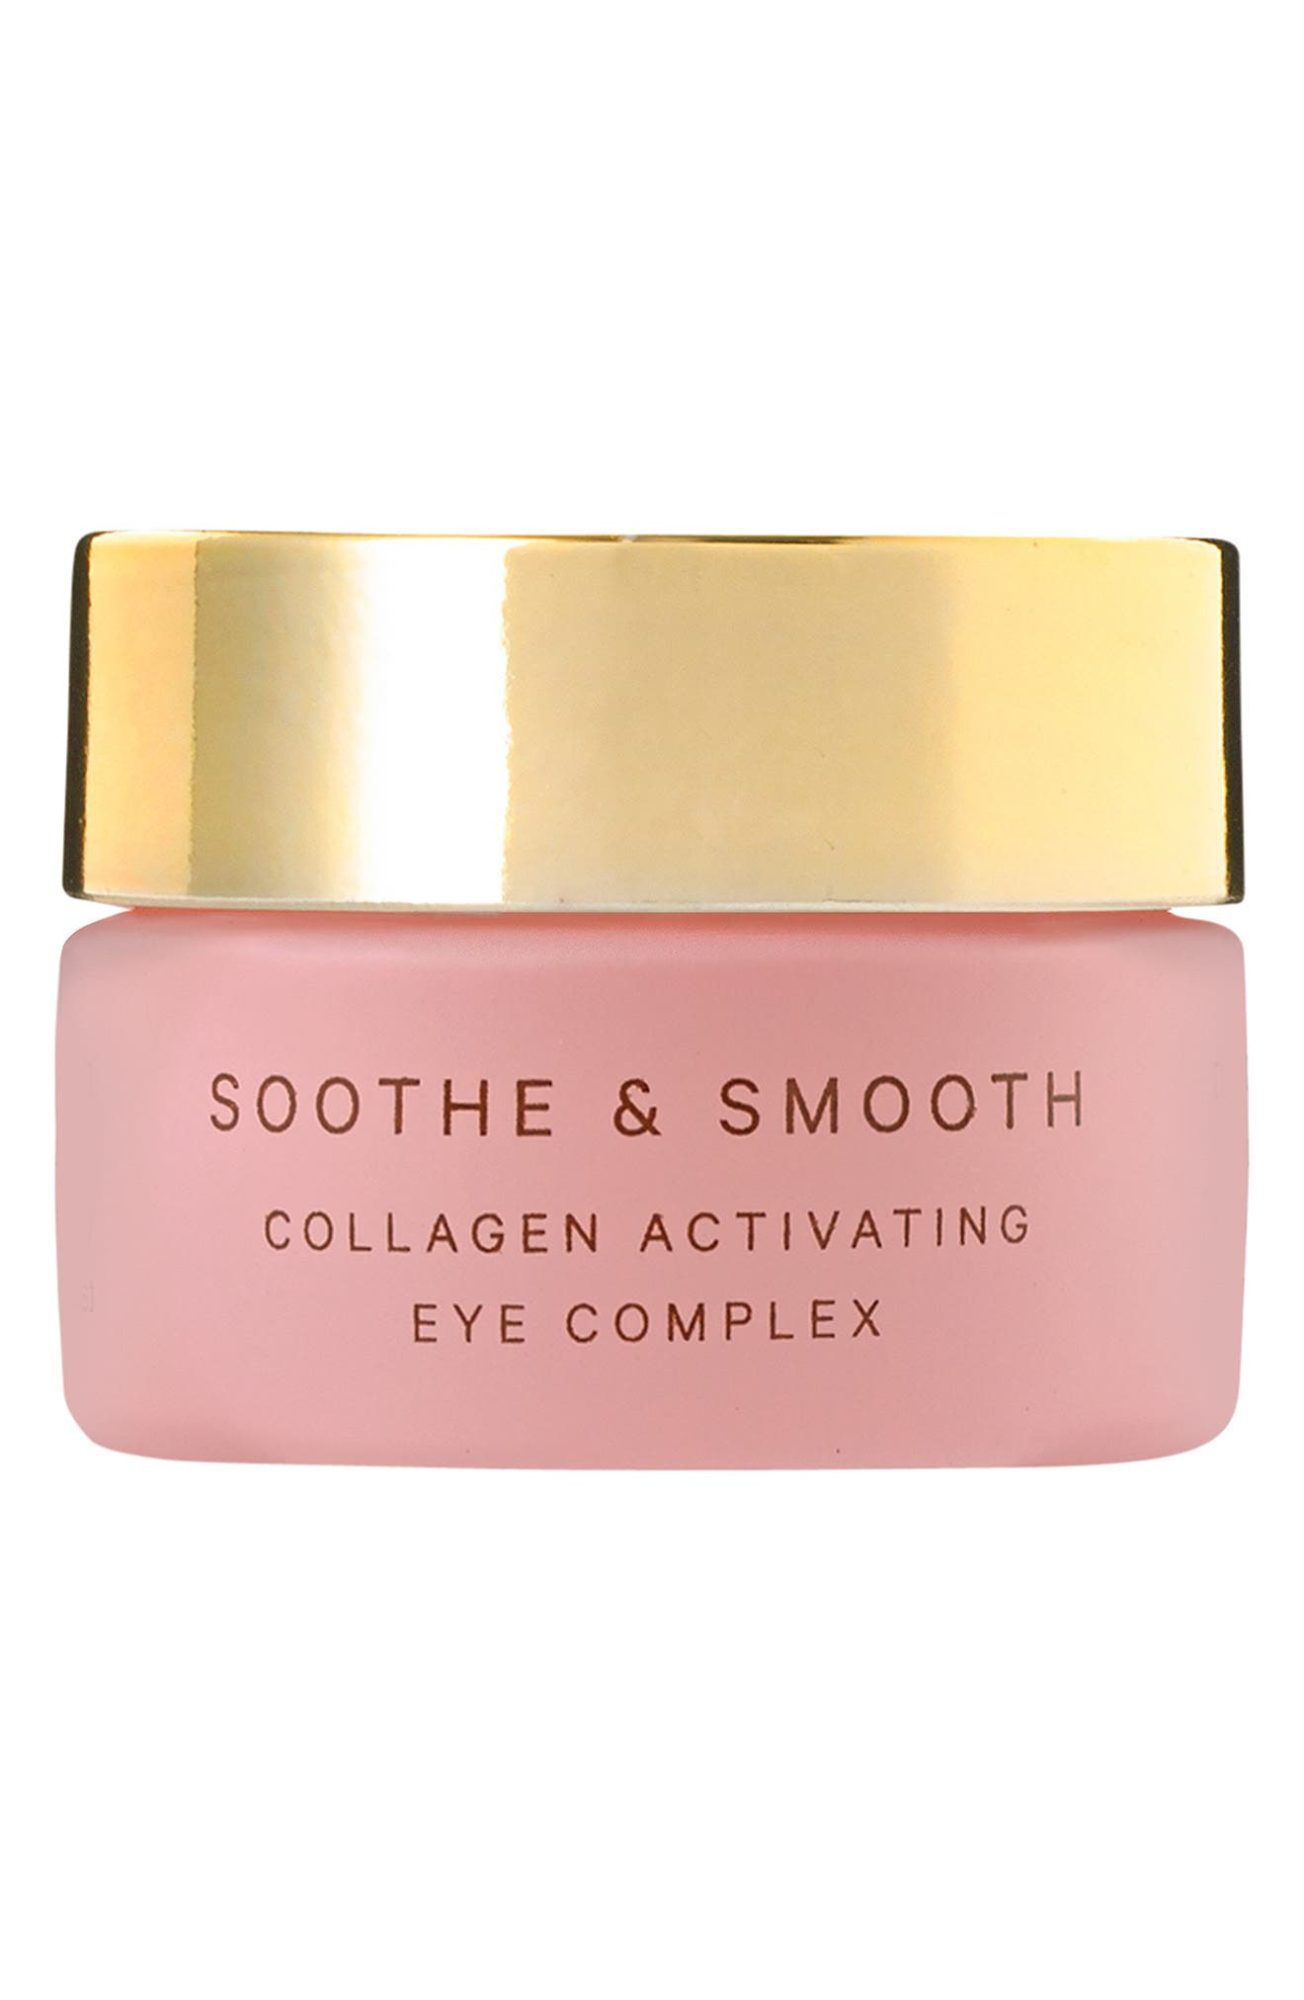 Soothe & Smooth Collagen Activating Eye Complex Eye Cream